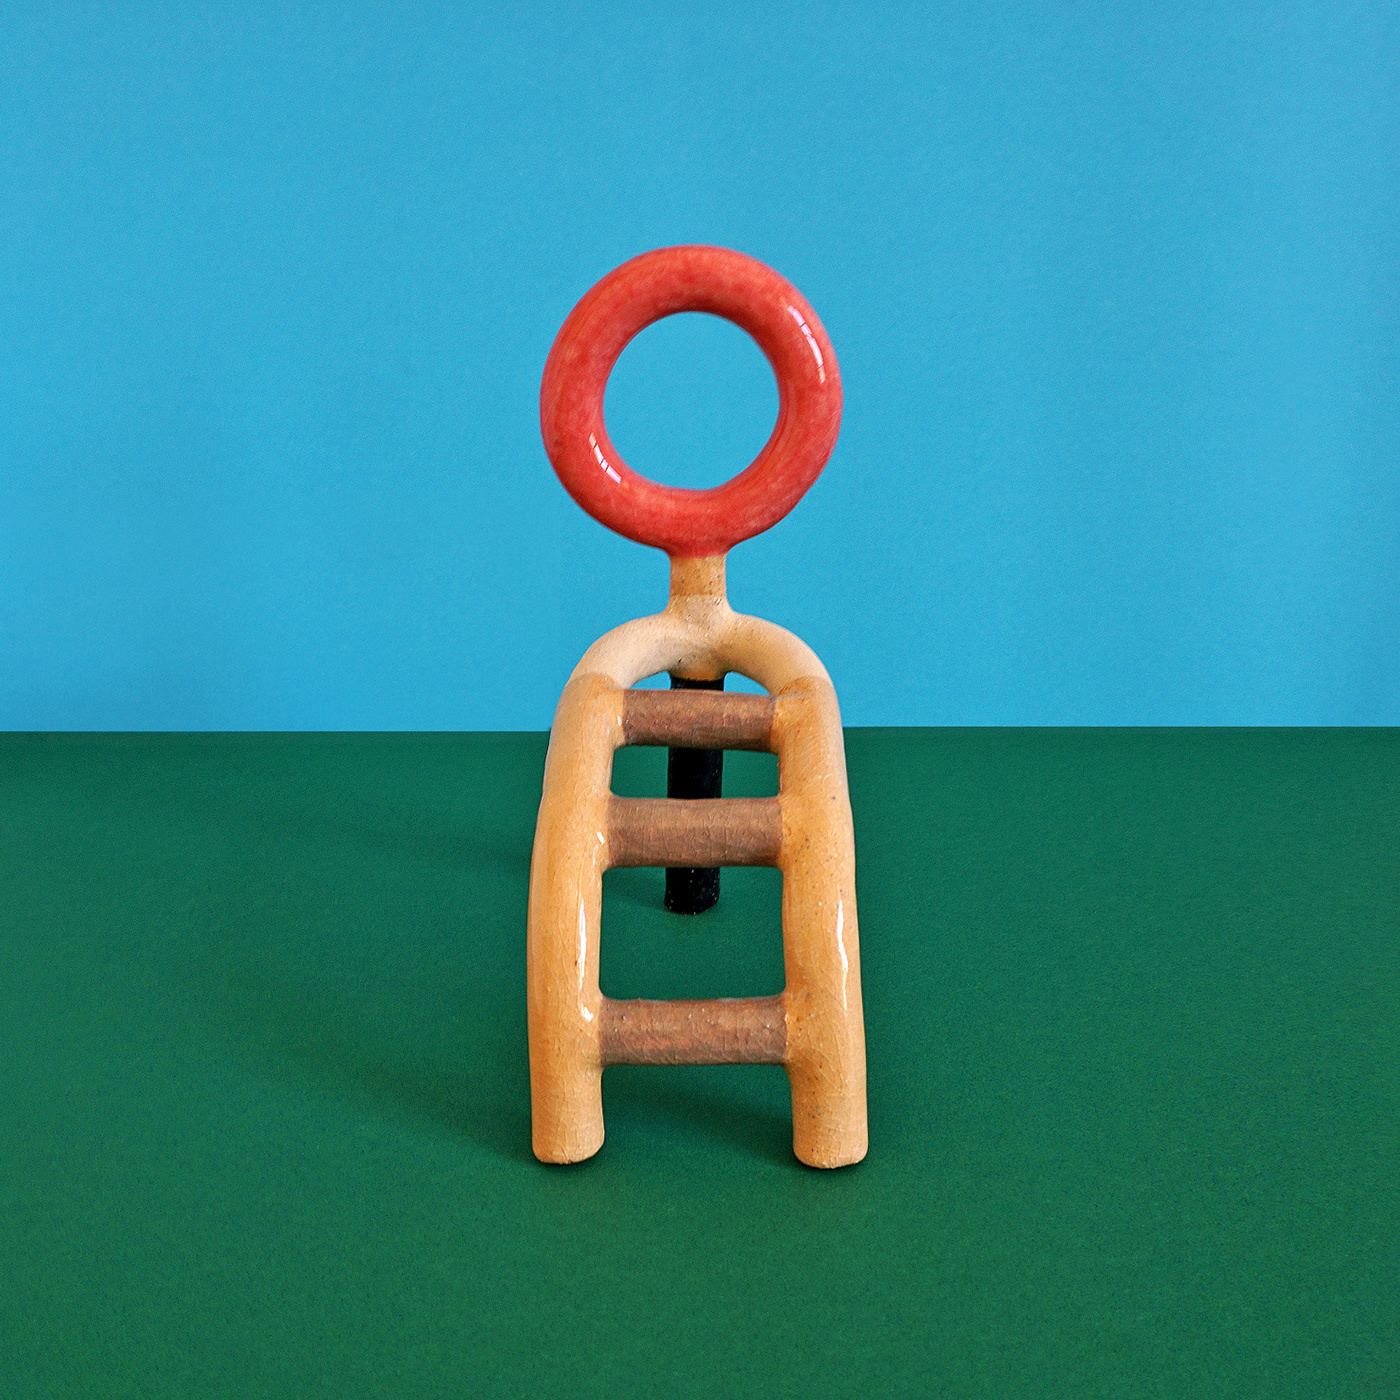 abran backyard ceramic designobject experimental Games object play Playground visual design